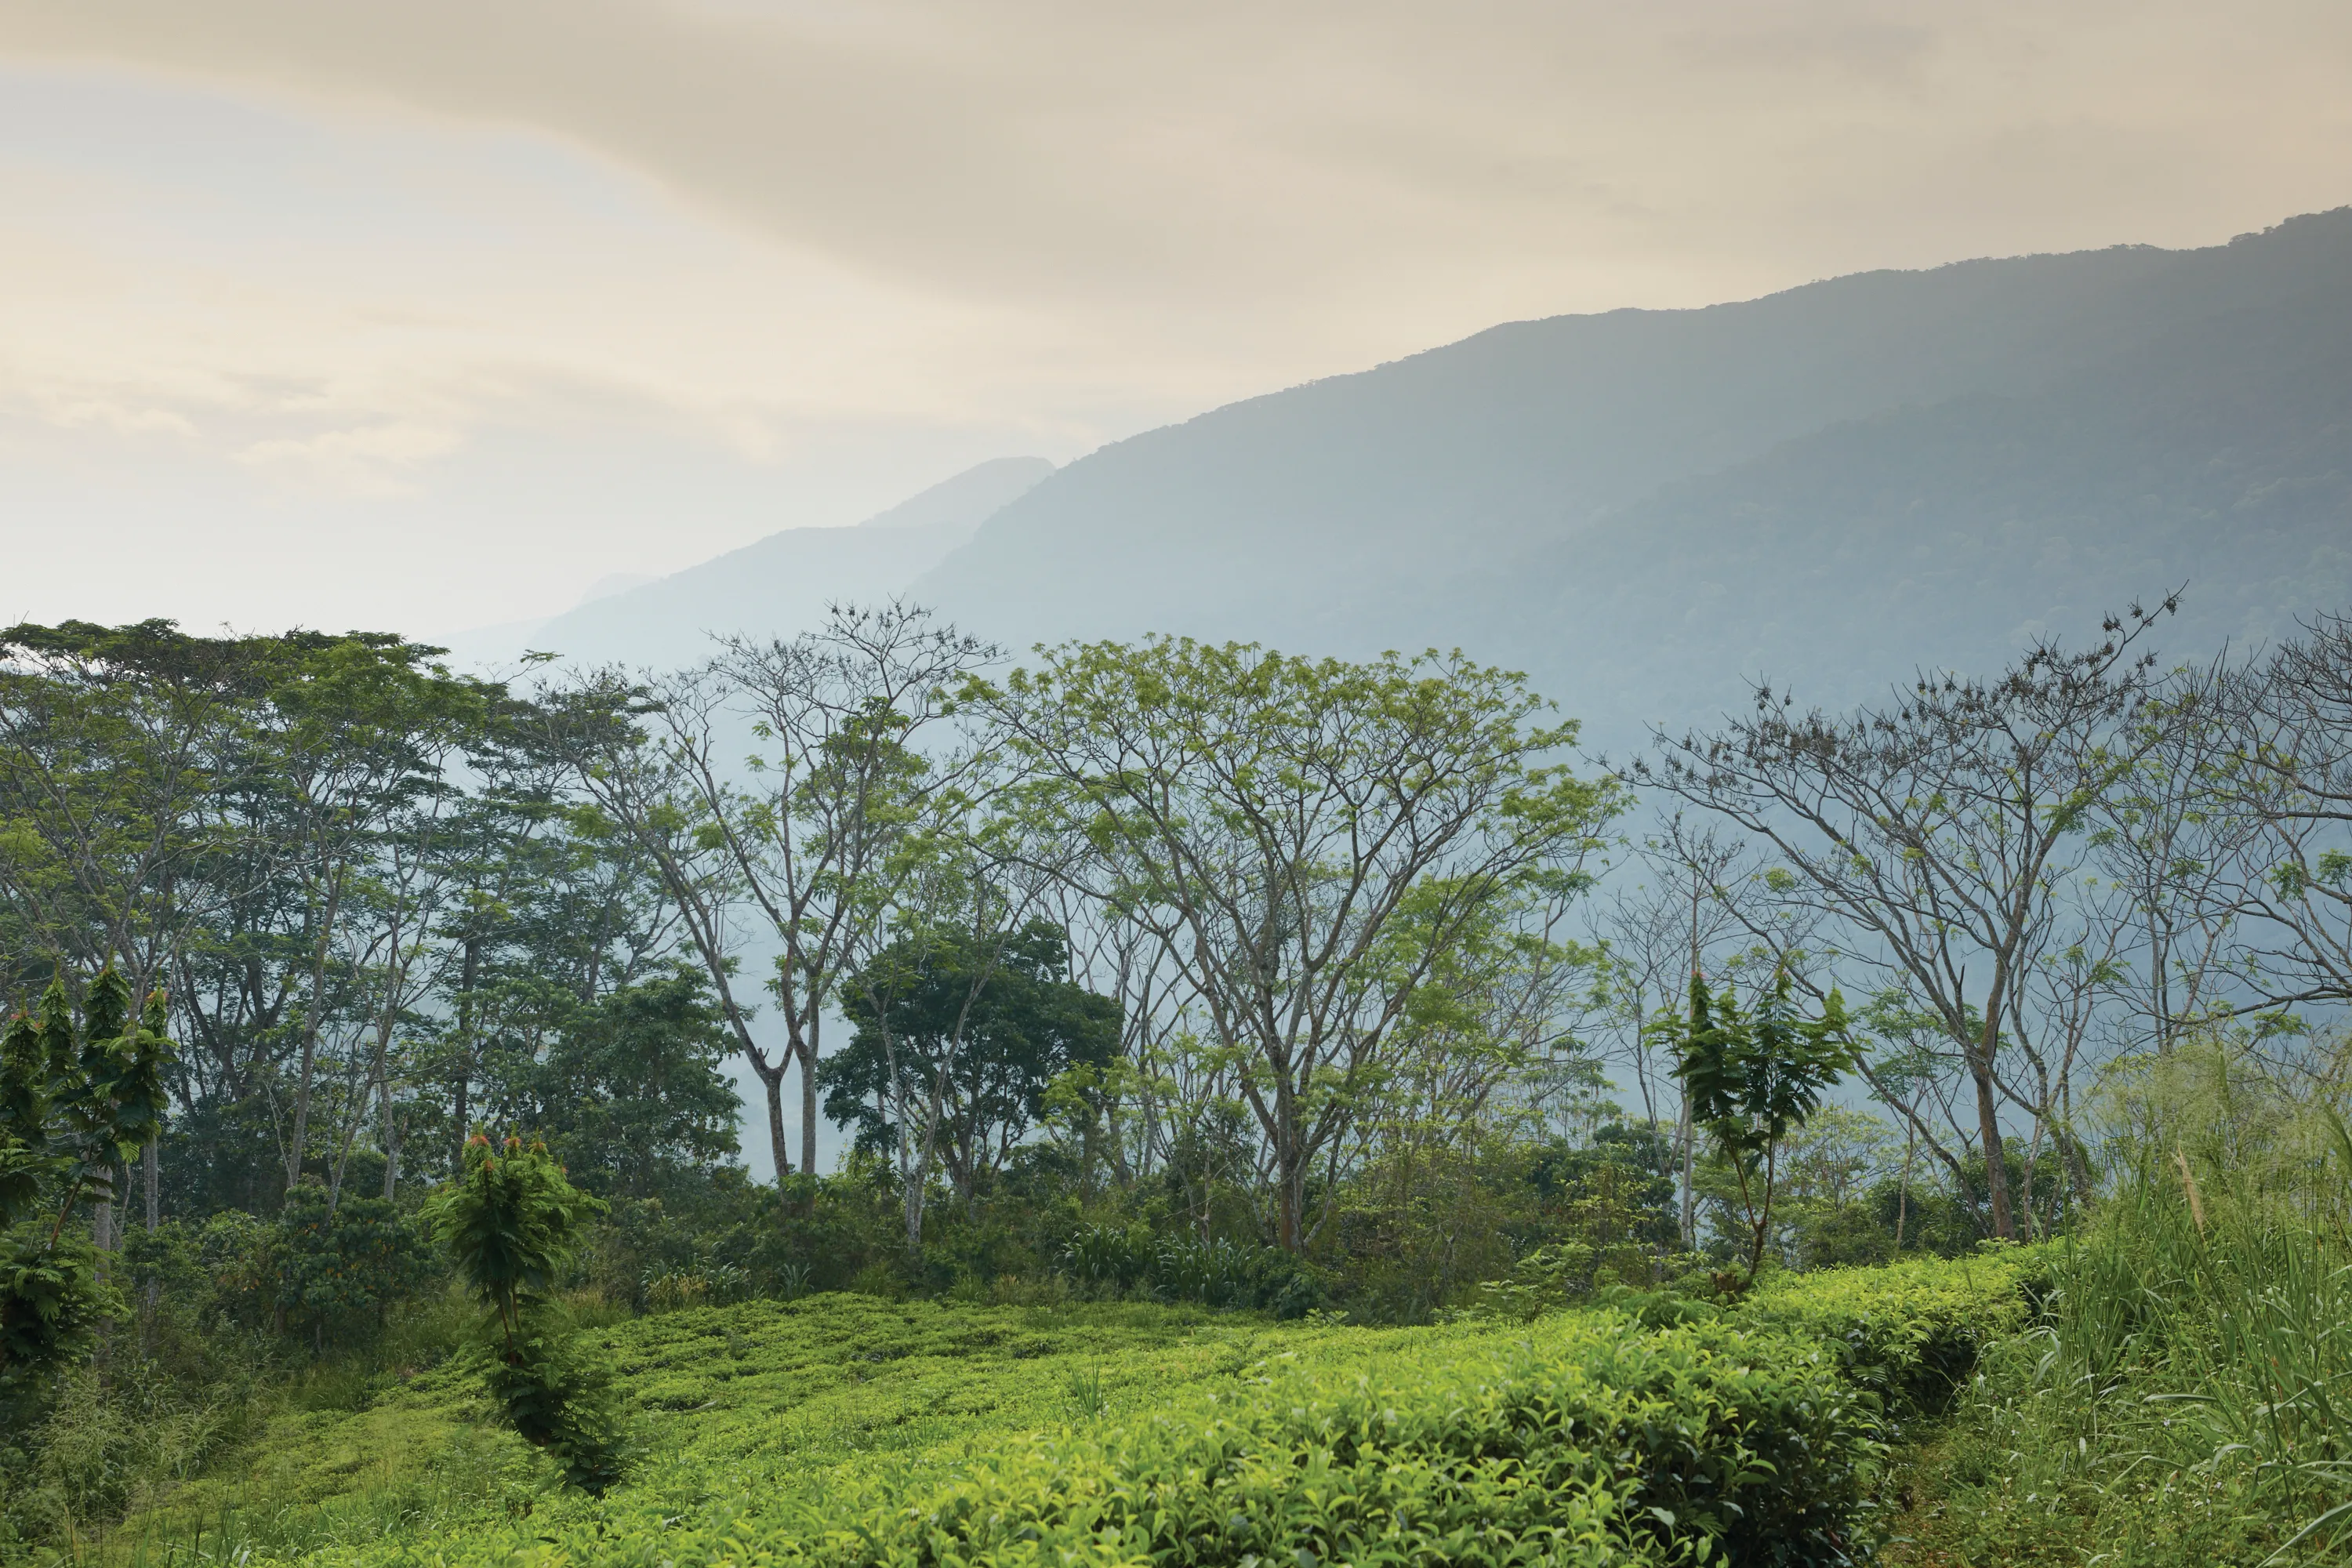 dilmah-tea-plantation-and-trees-surrounding.jpg